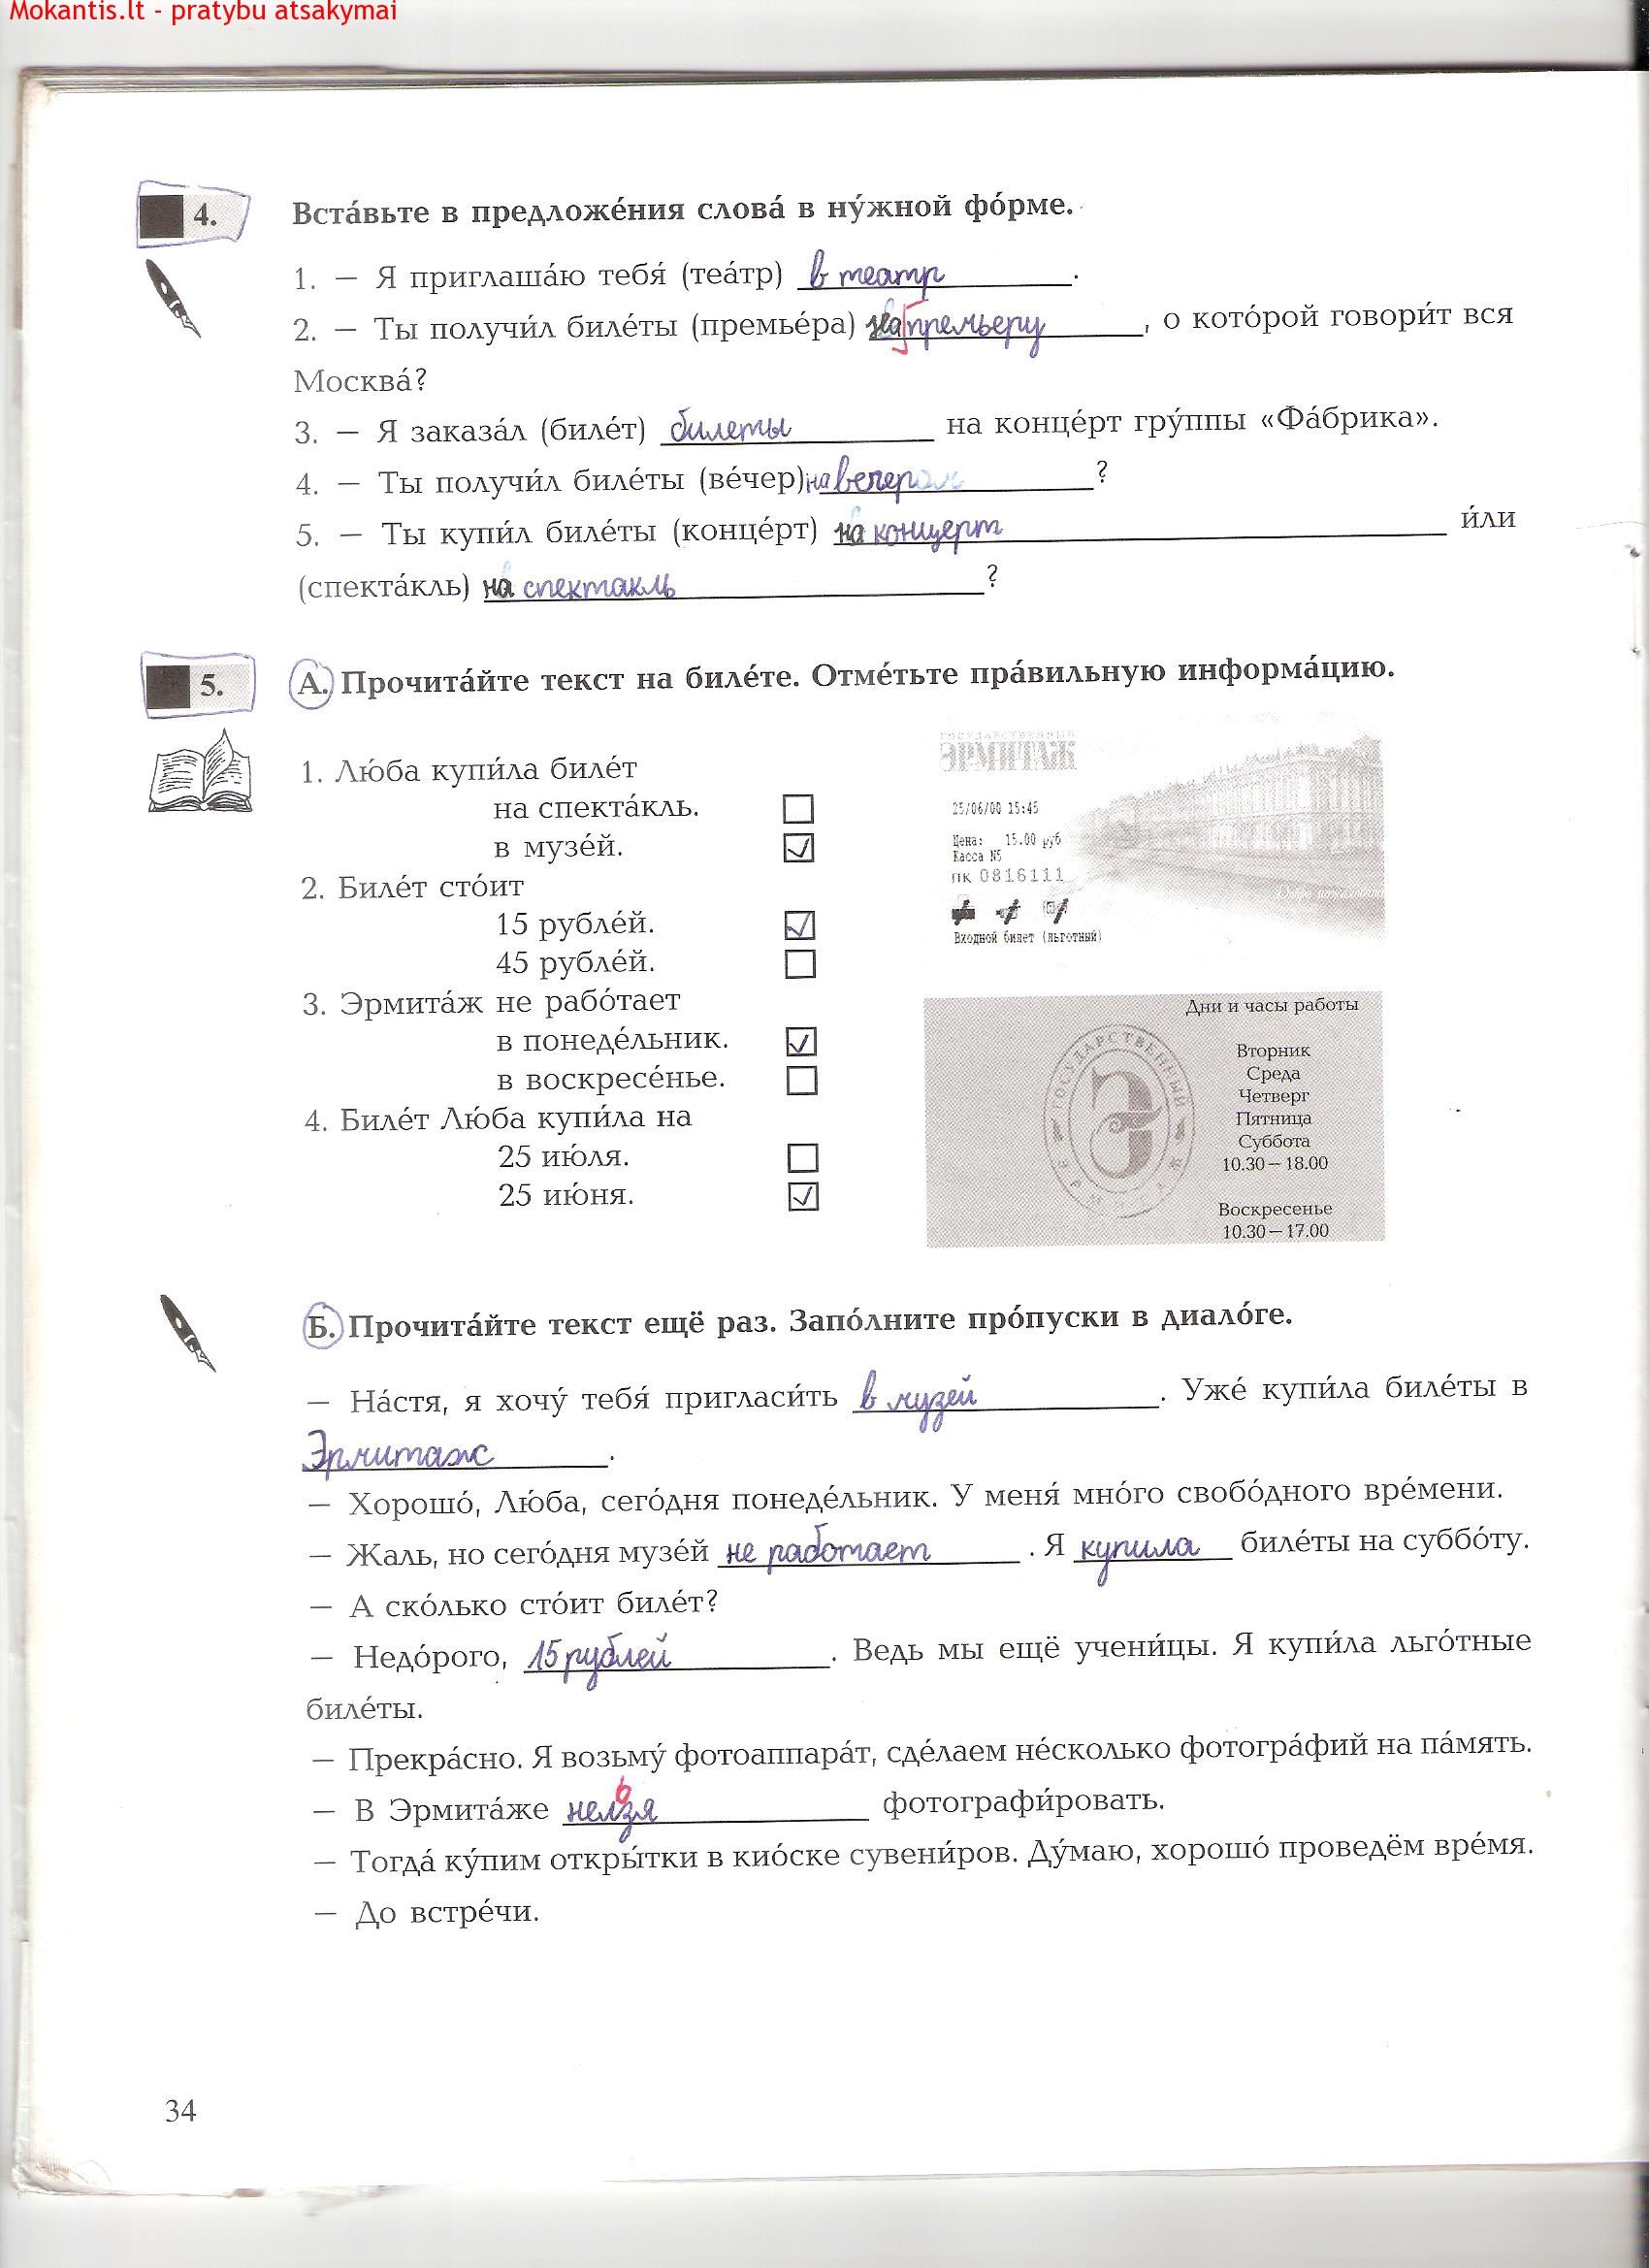 Rusų kalba ŠAG ZA ŠAGOM 3